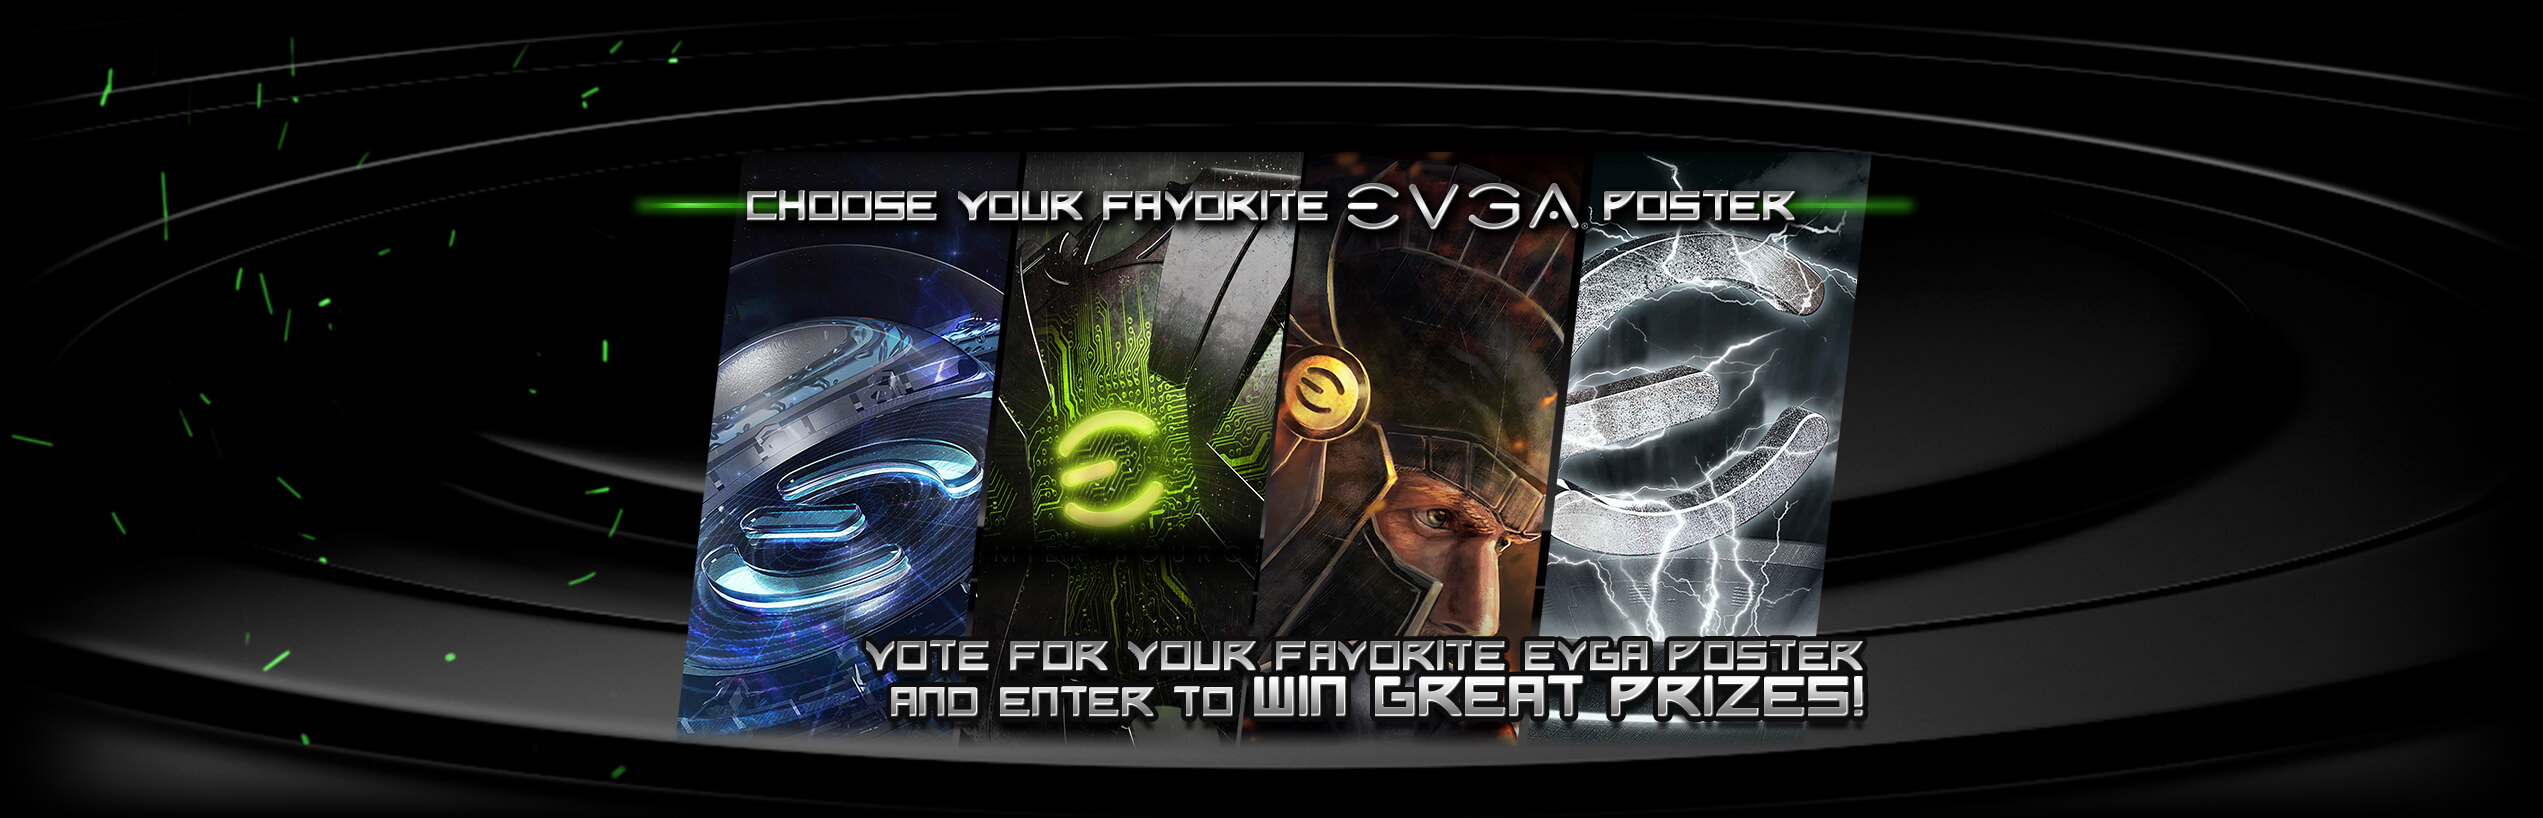 Choose your favorite EVGA poster!